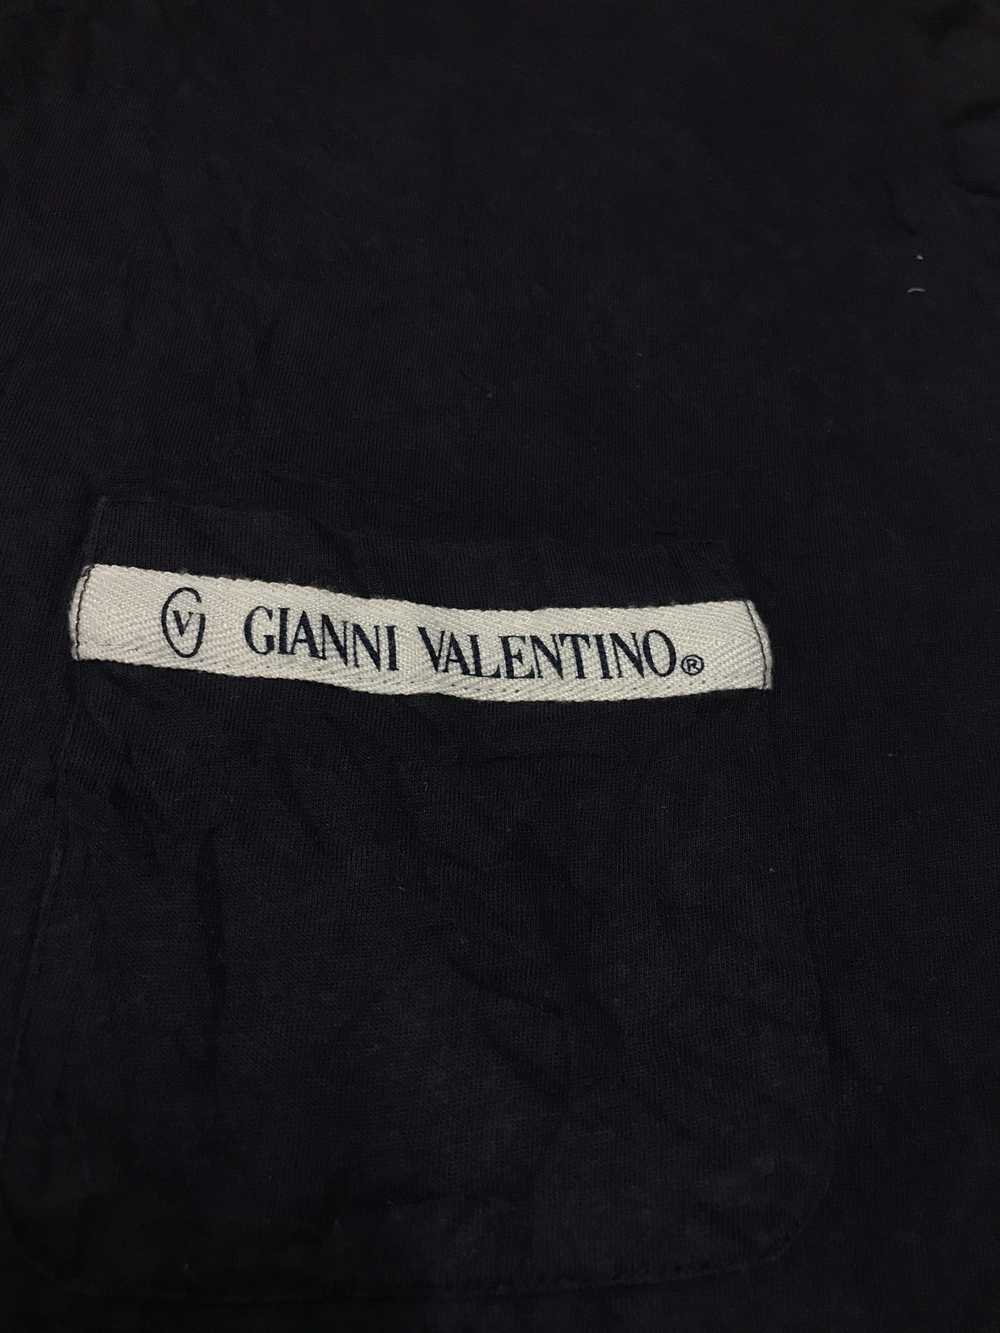 Gianni × Giovanni Valentino × Vintage Gianni Vale… - image 2